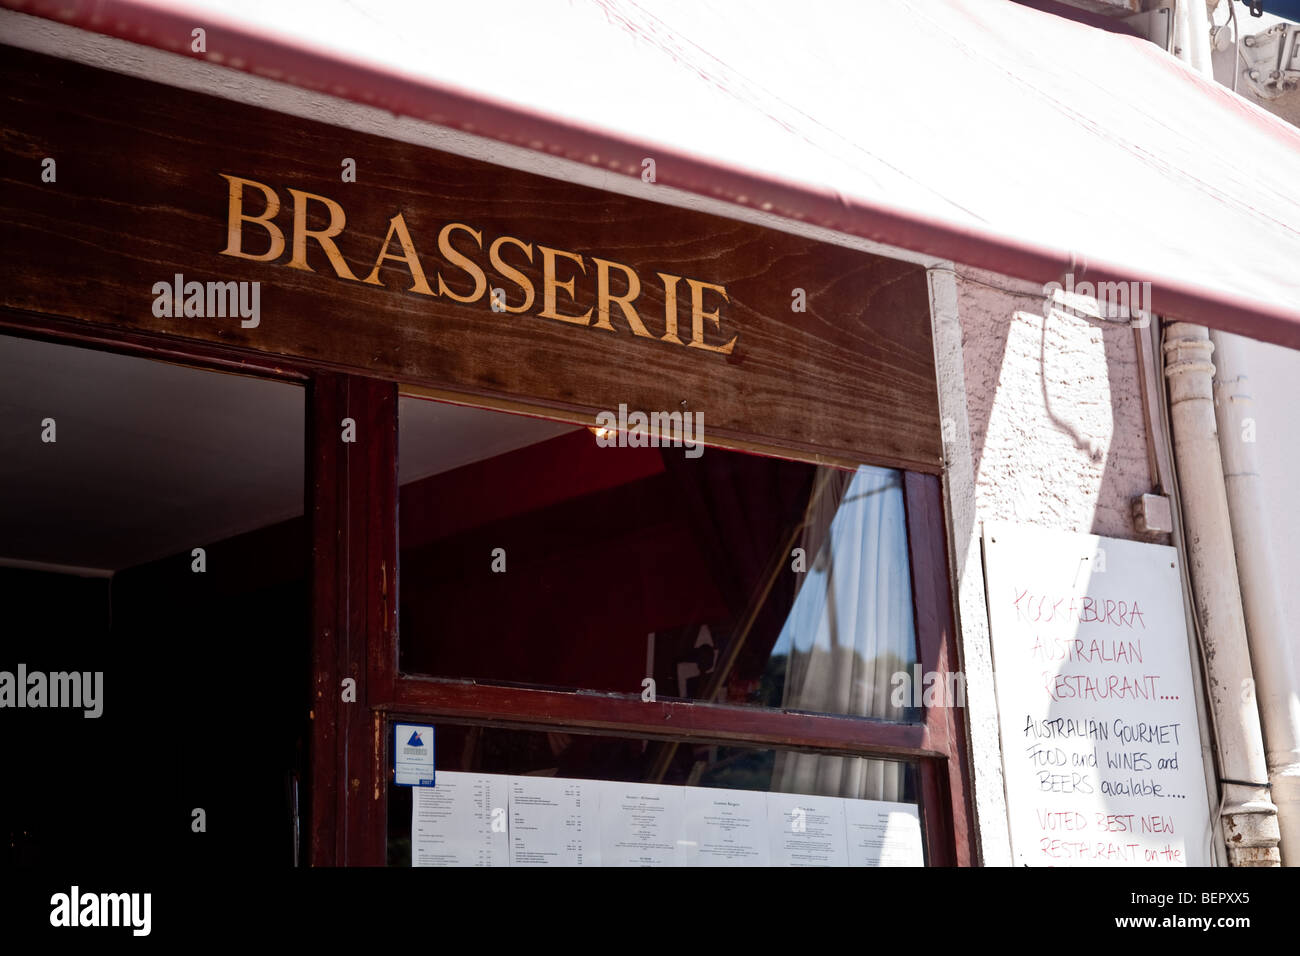 Brasserie shop sign Stock Photo